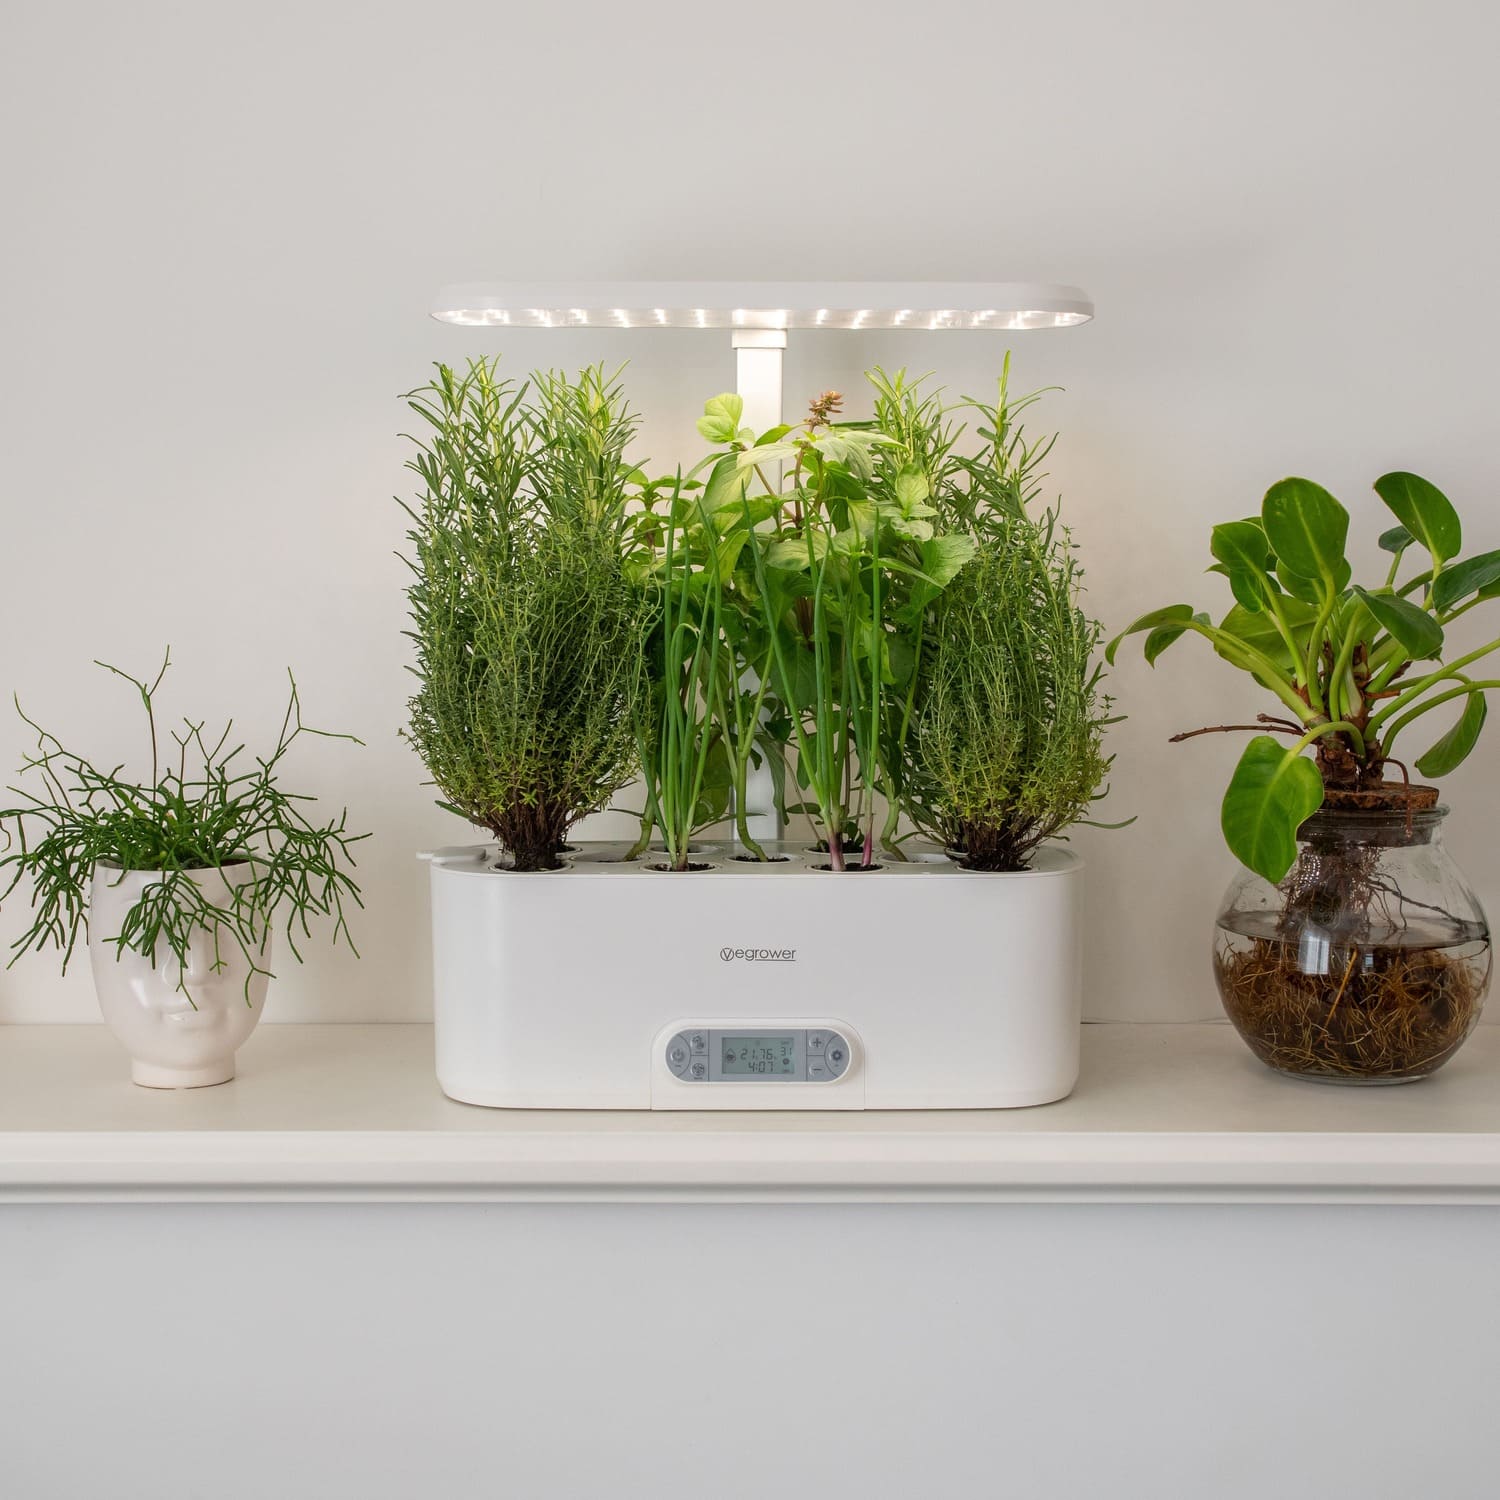 Vegrower H1 Indoor Garden System with 11 Pods